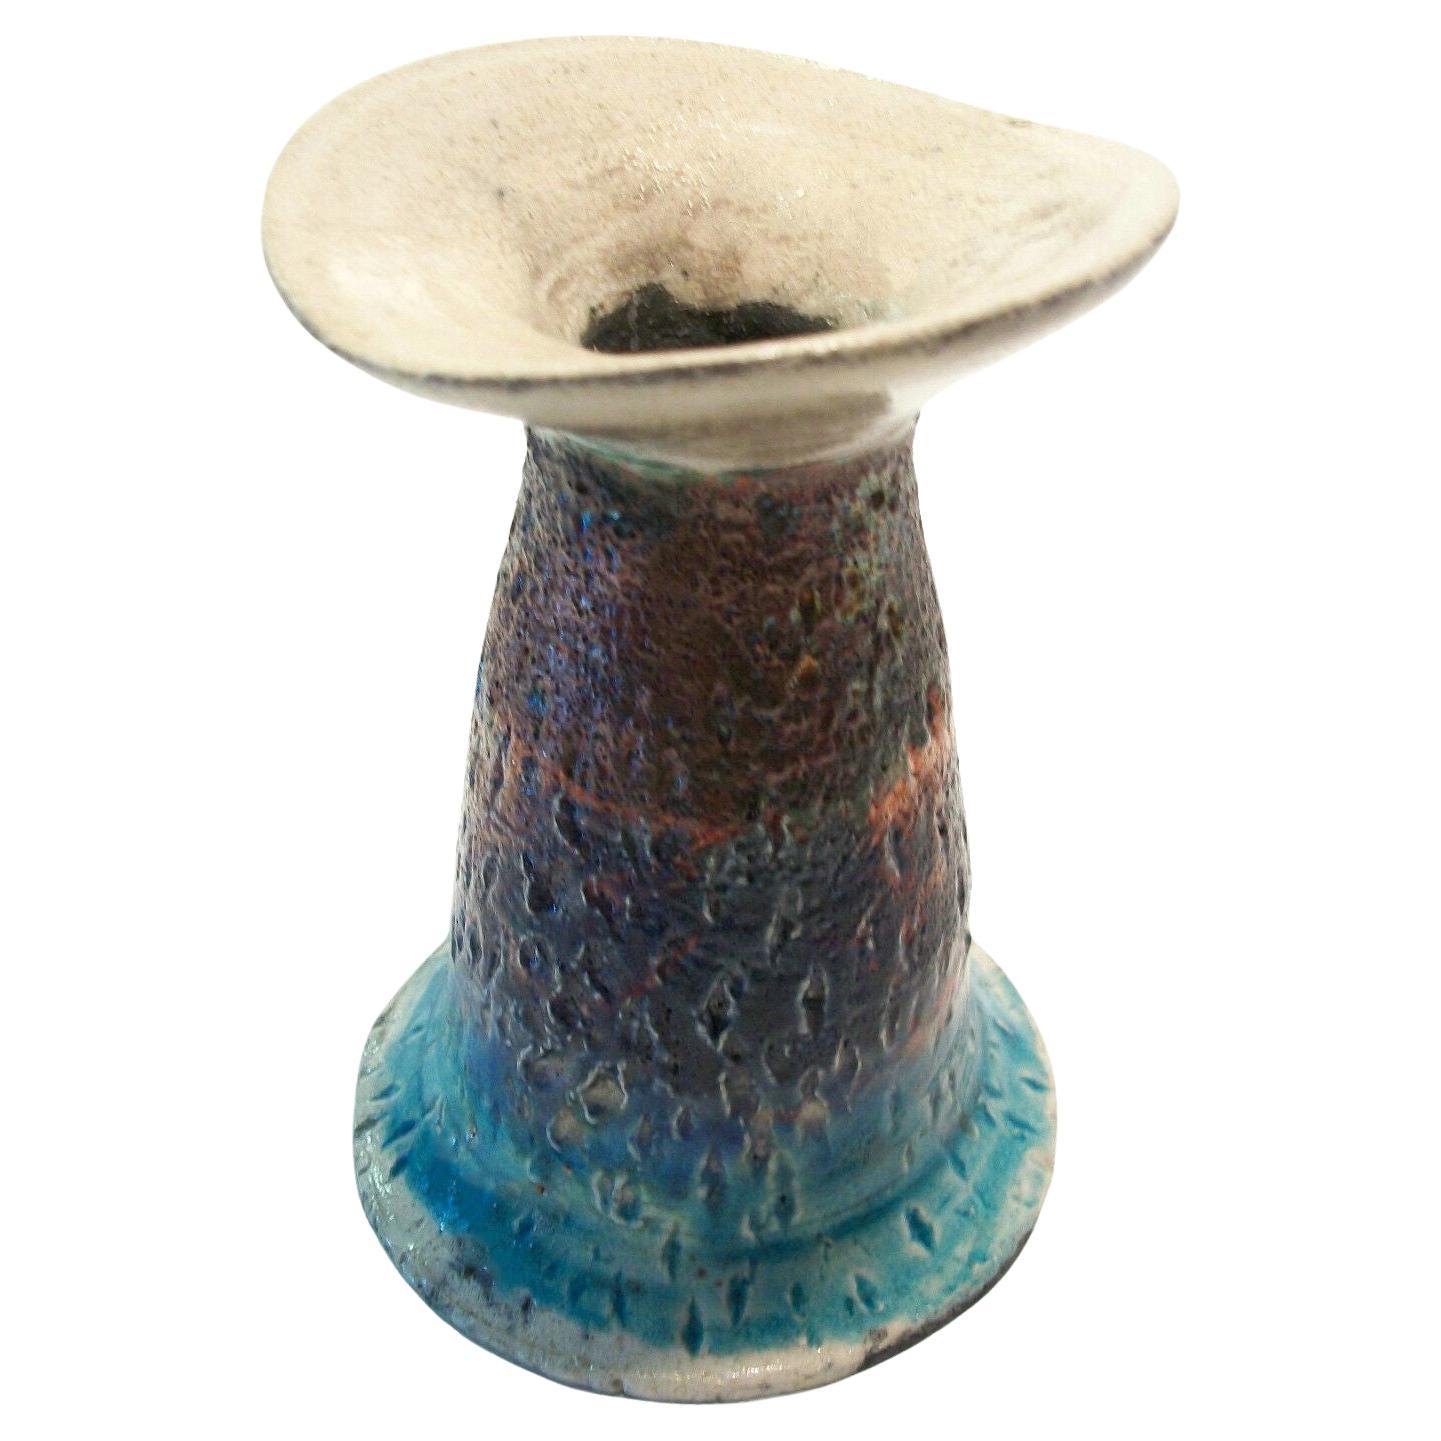 Vintage Raku Studio Pottery Vase - Iridescent Glaze - Signed - Circa 1970's